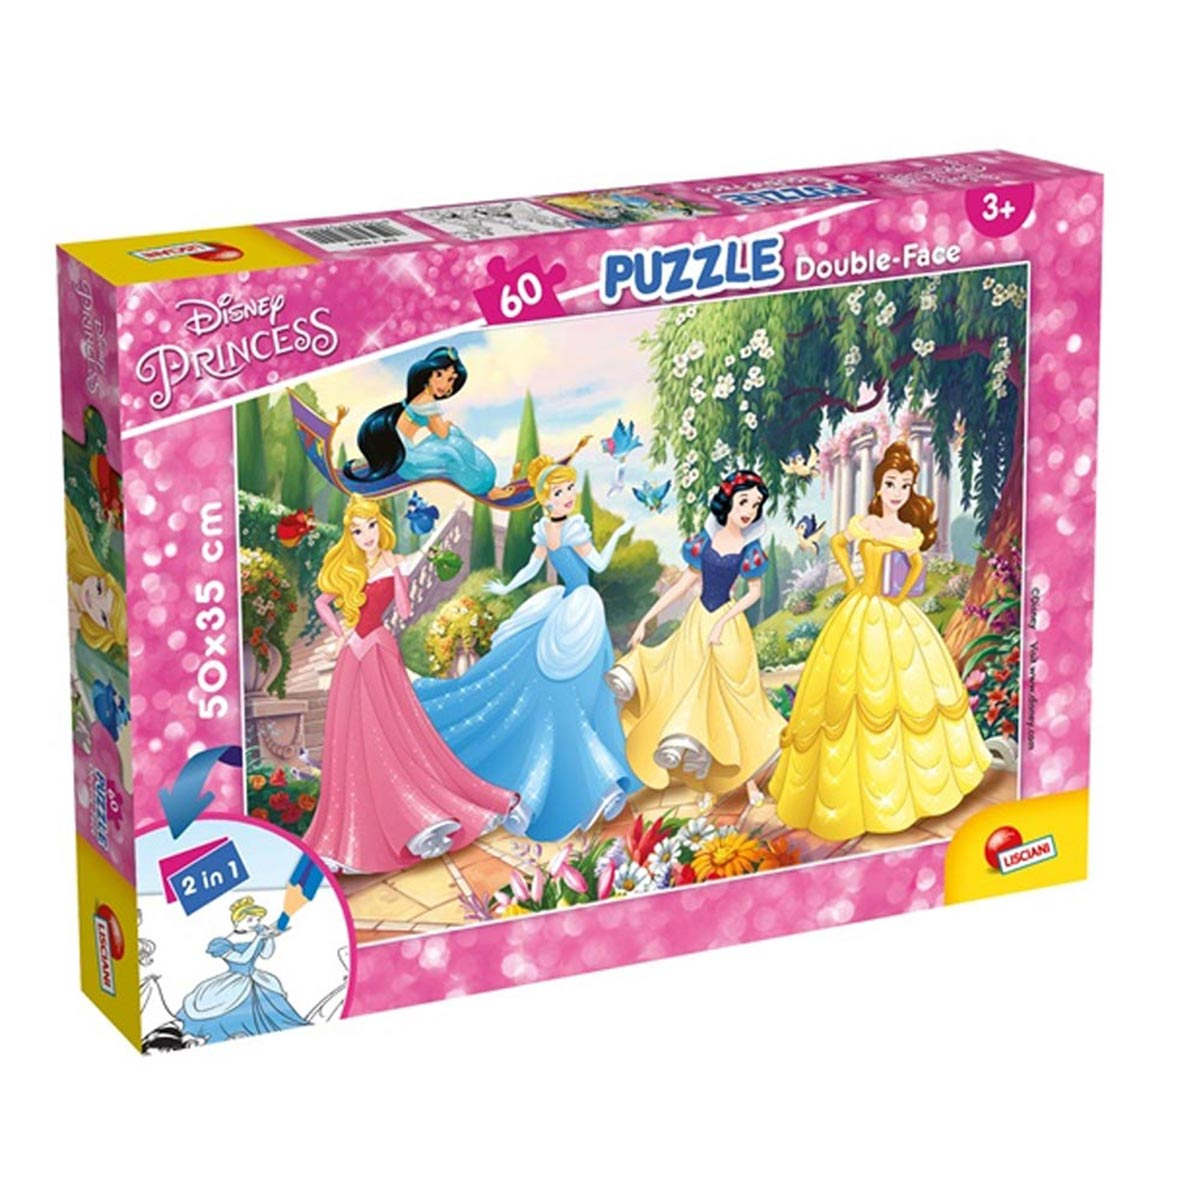 Ausmal-Puzzle (50x35cm) PRINCESS 60 von Teile, Lisciani Lernspiele DISNEY Prinzessin